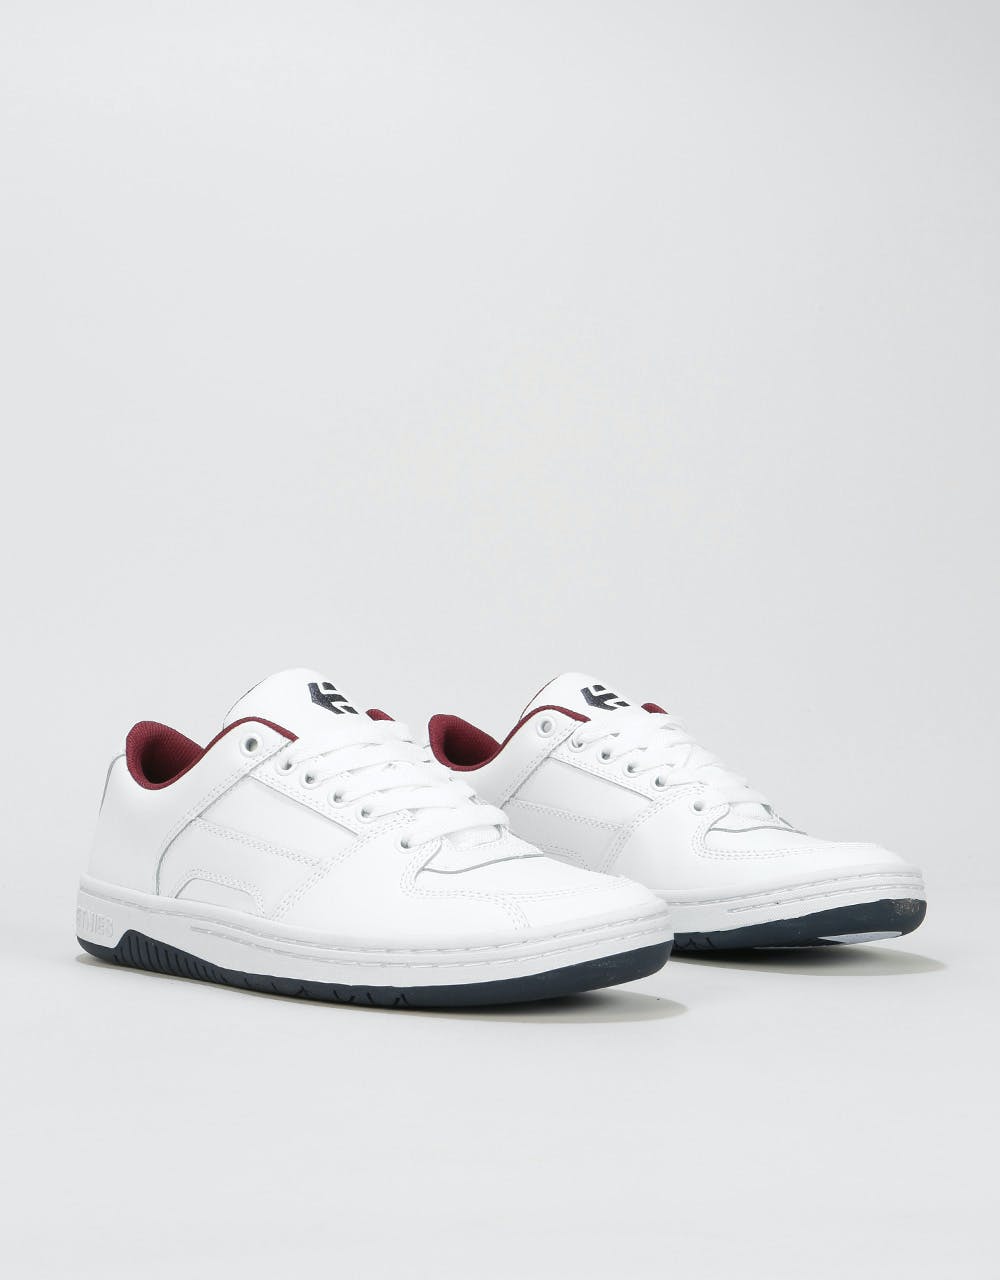 Etnies Senix Lo Skate Shoes - White/Navy/Red